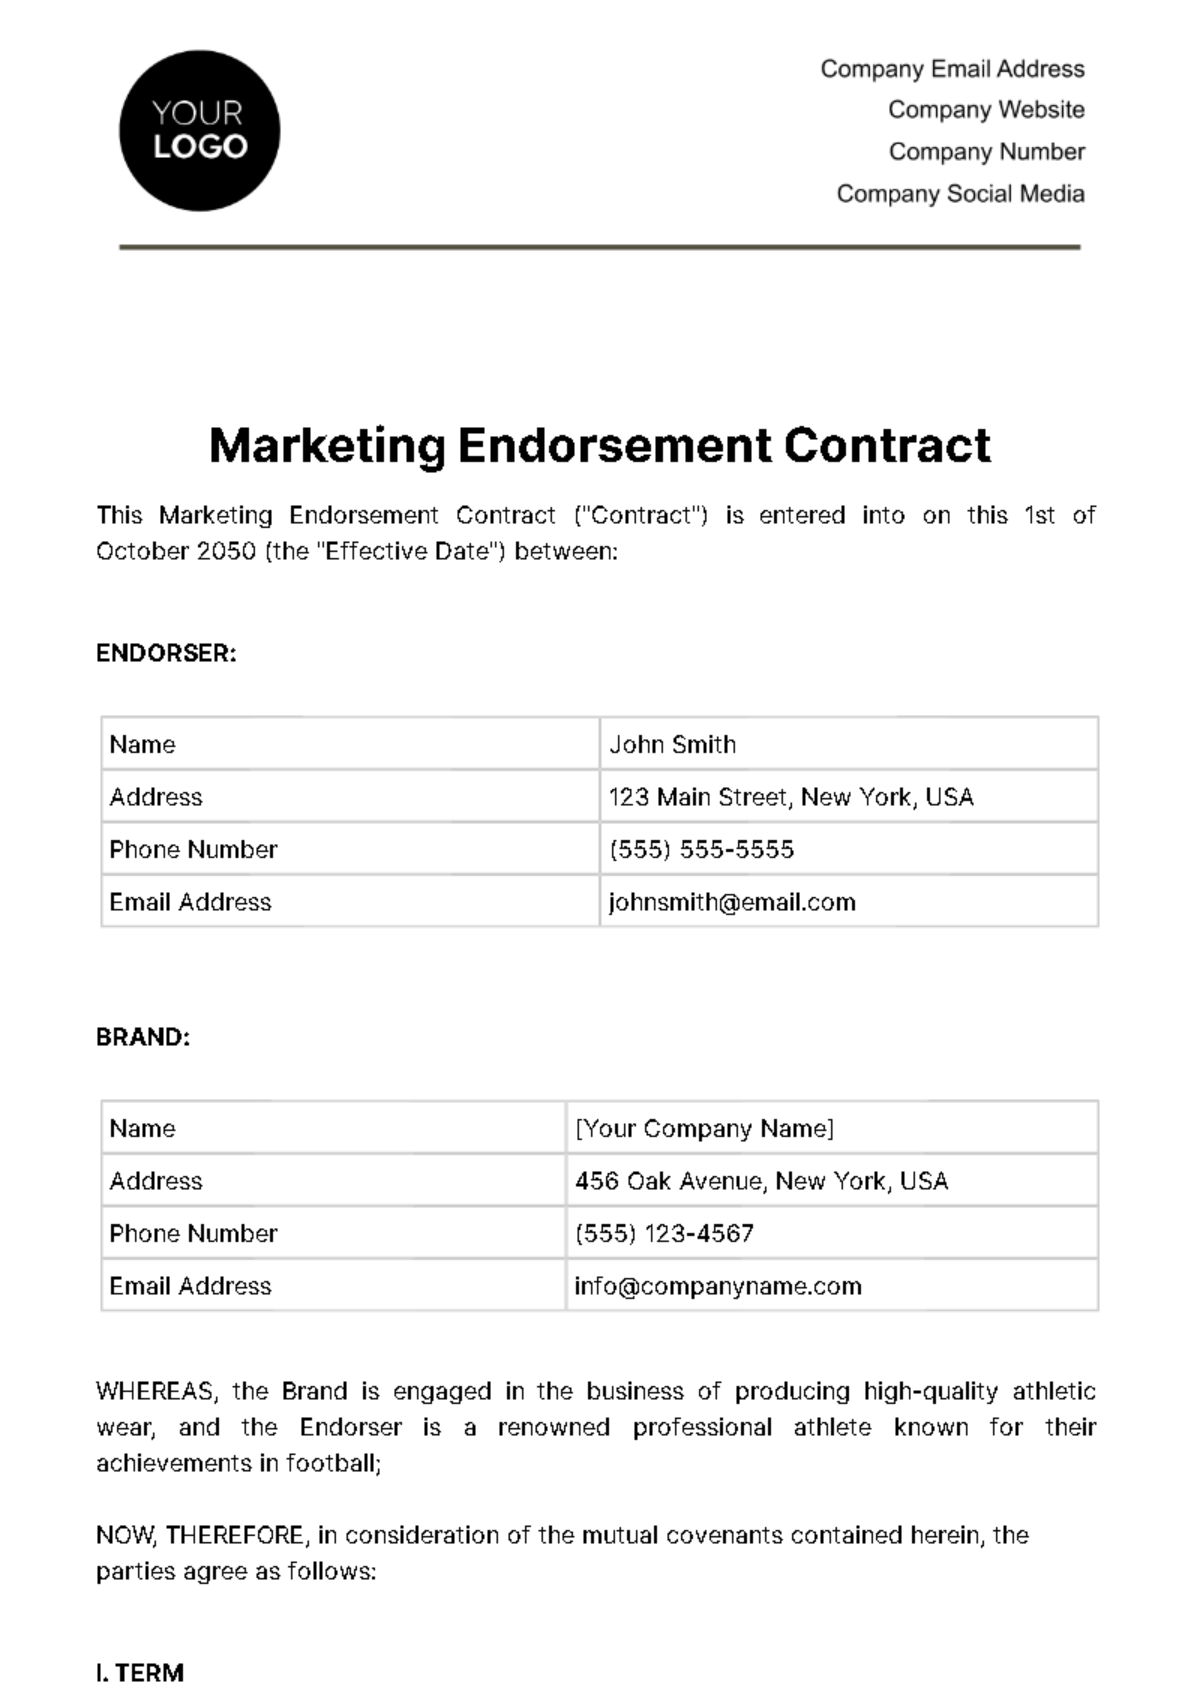 Marketing Endorsement Contract Template